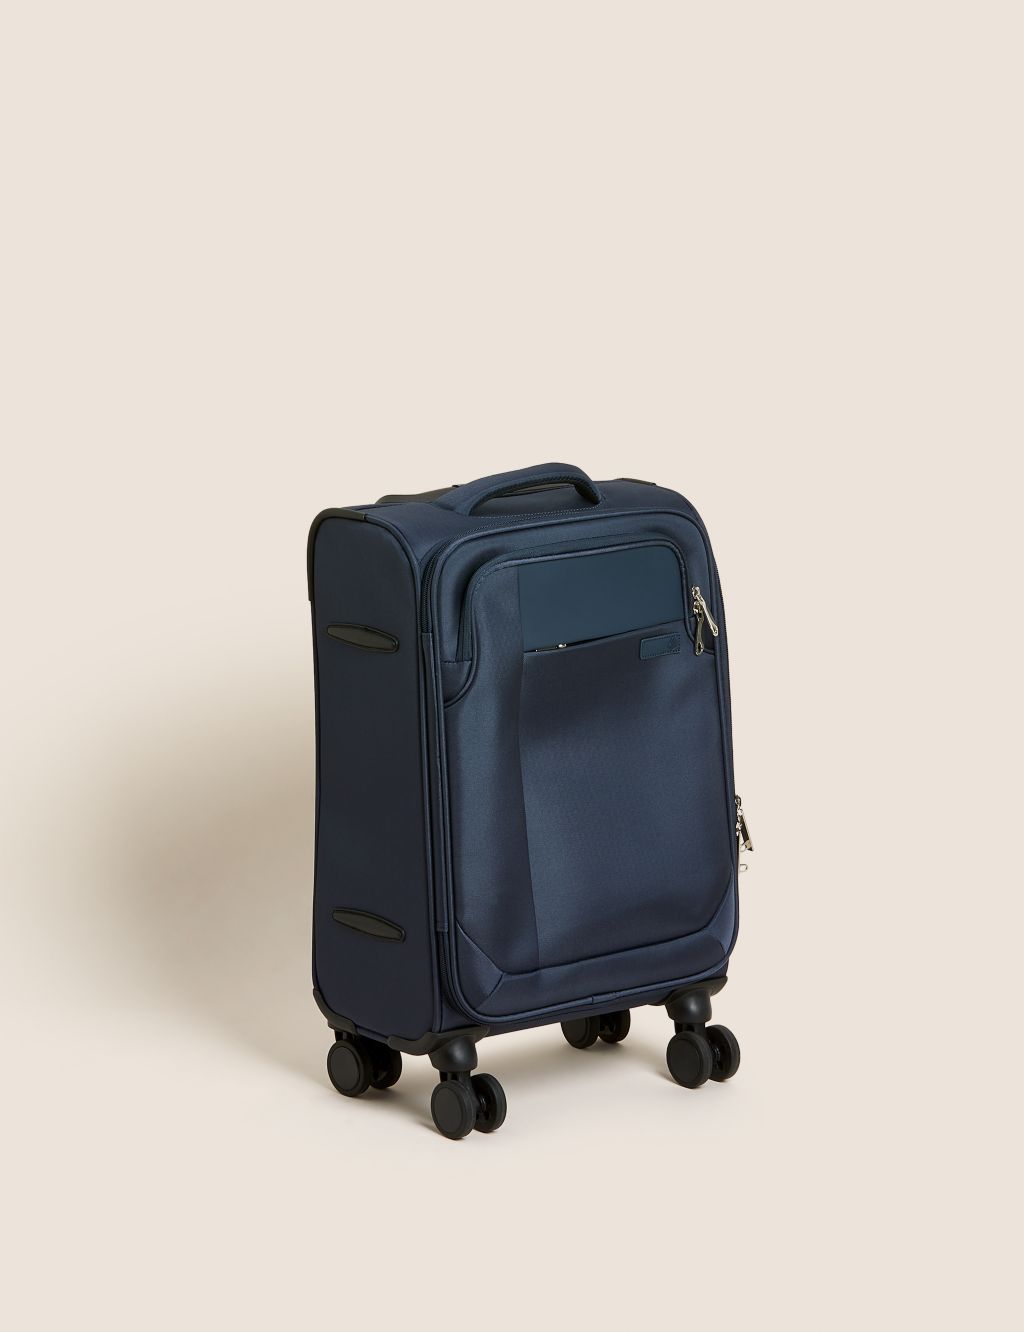 Lyon 4 Wheel Soft Cabin Suitcase image 1